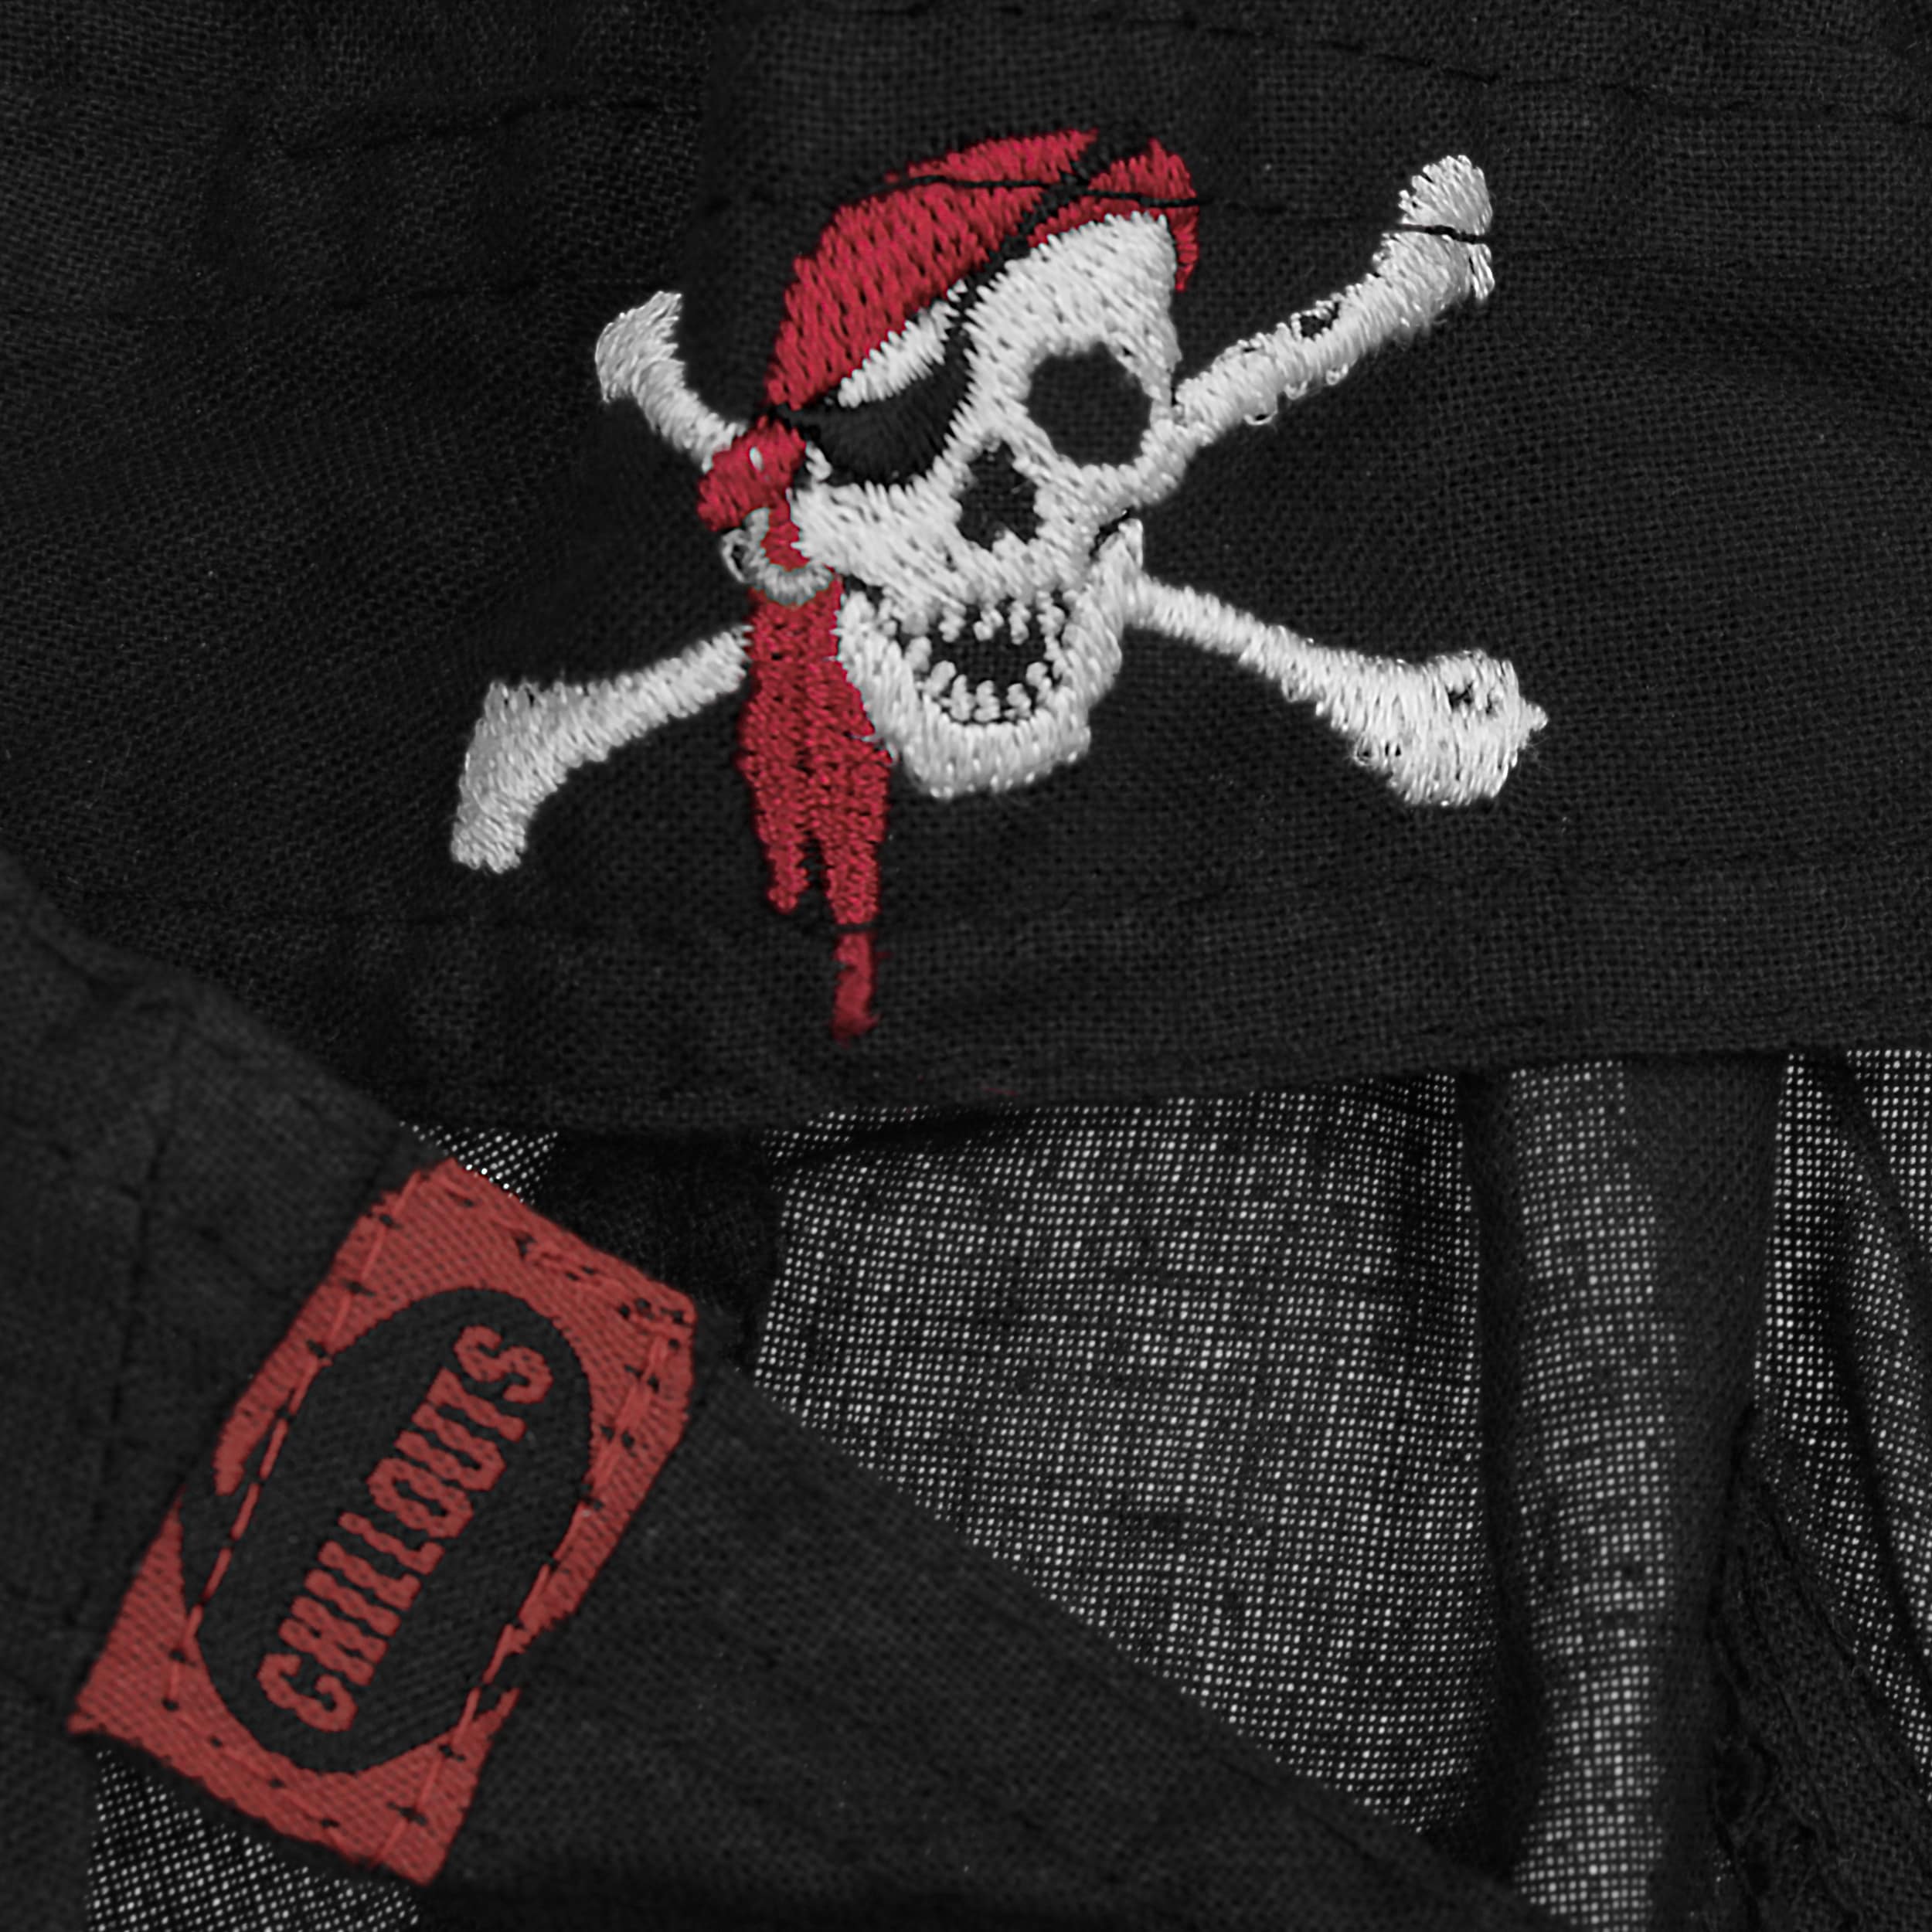 Bandana Red Pirate by Chillouts pañuelo para cabezapañuelo de pirata